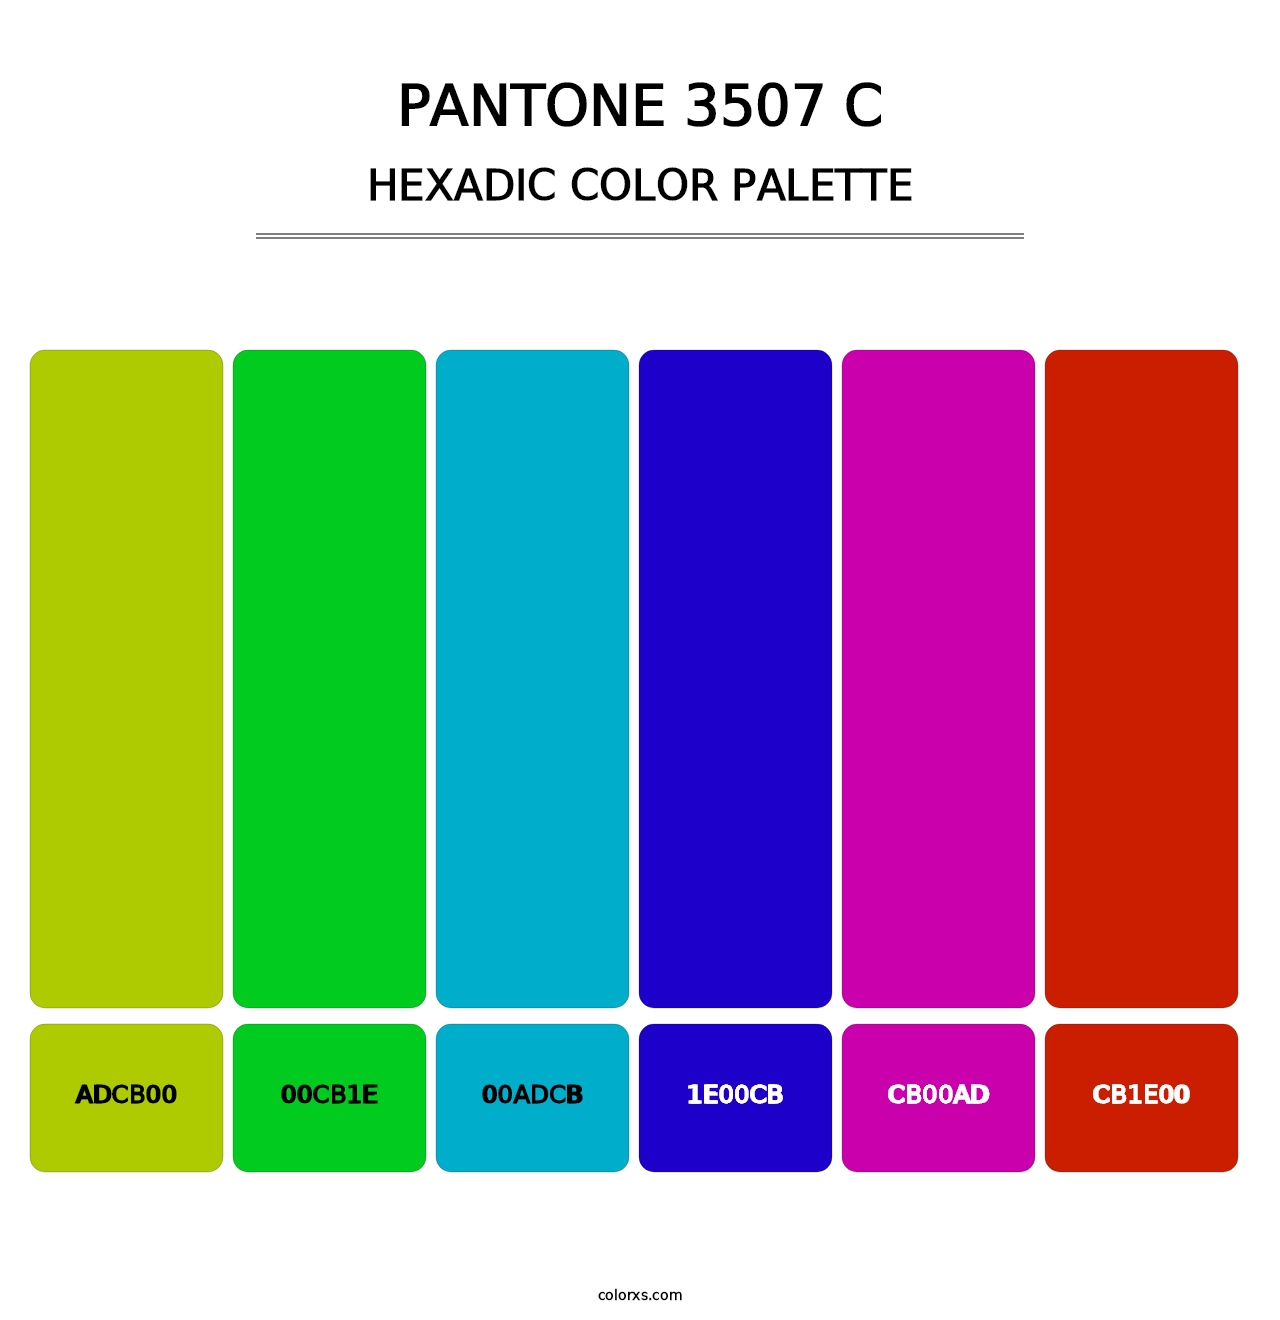 PANTONE 3507 C - Hexadic Color Palette